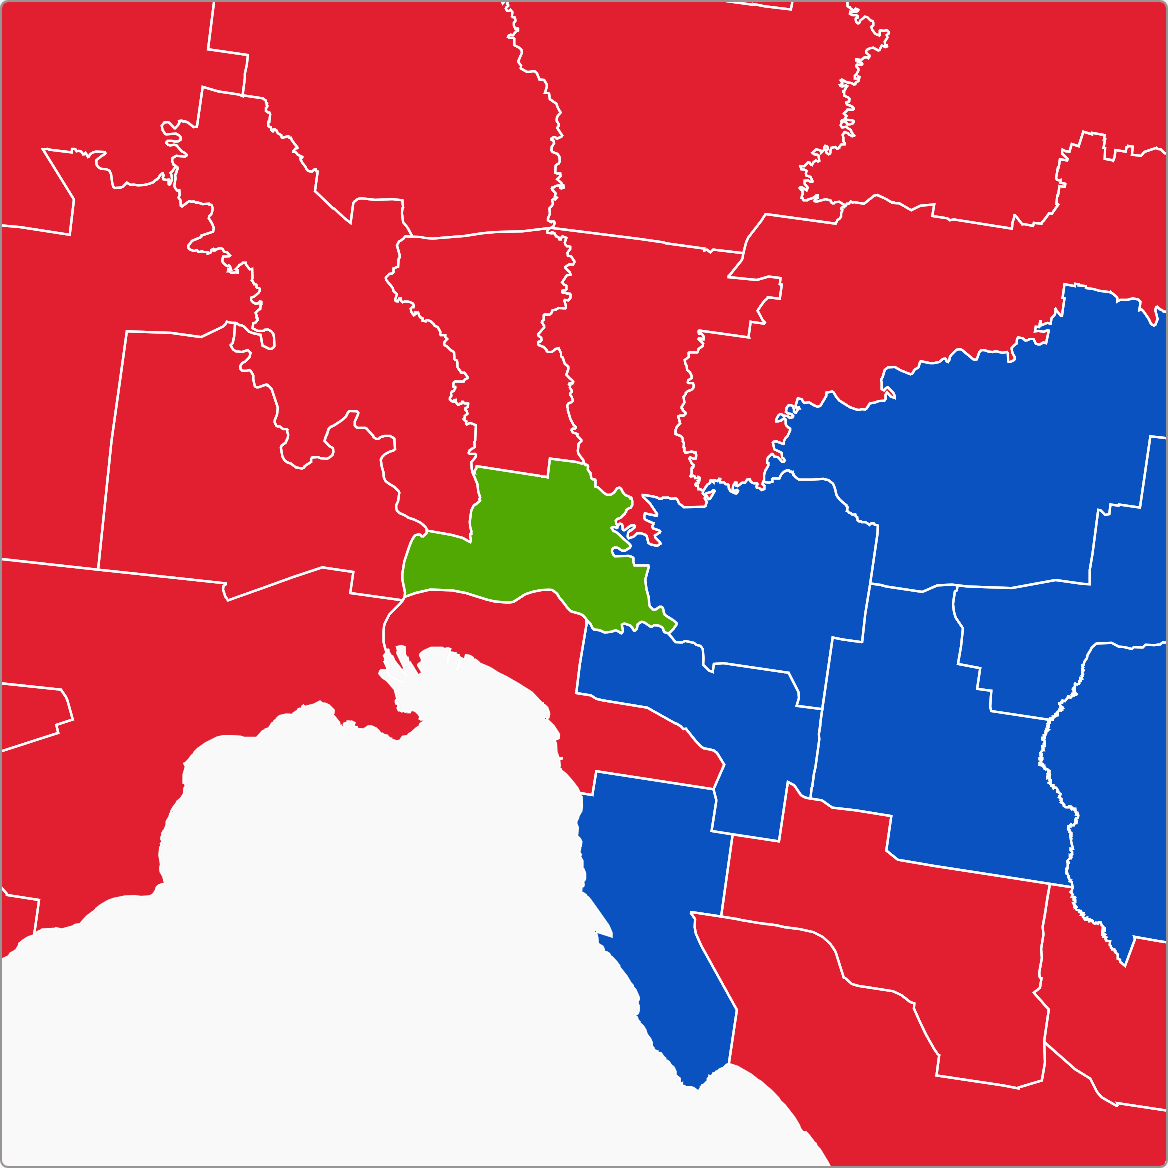 The 2019 Melbourne election result.